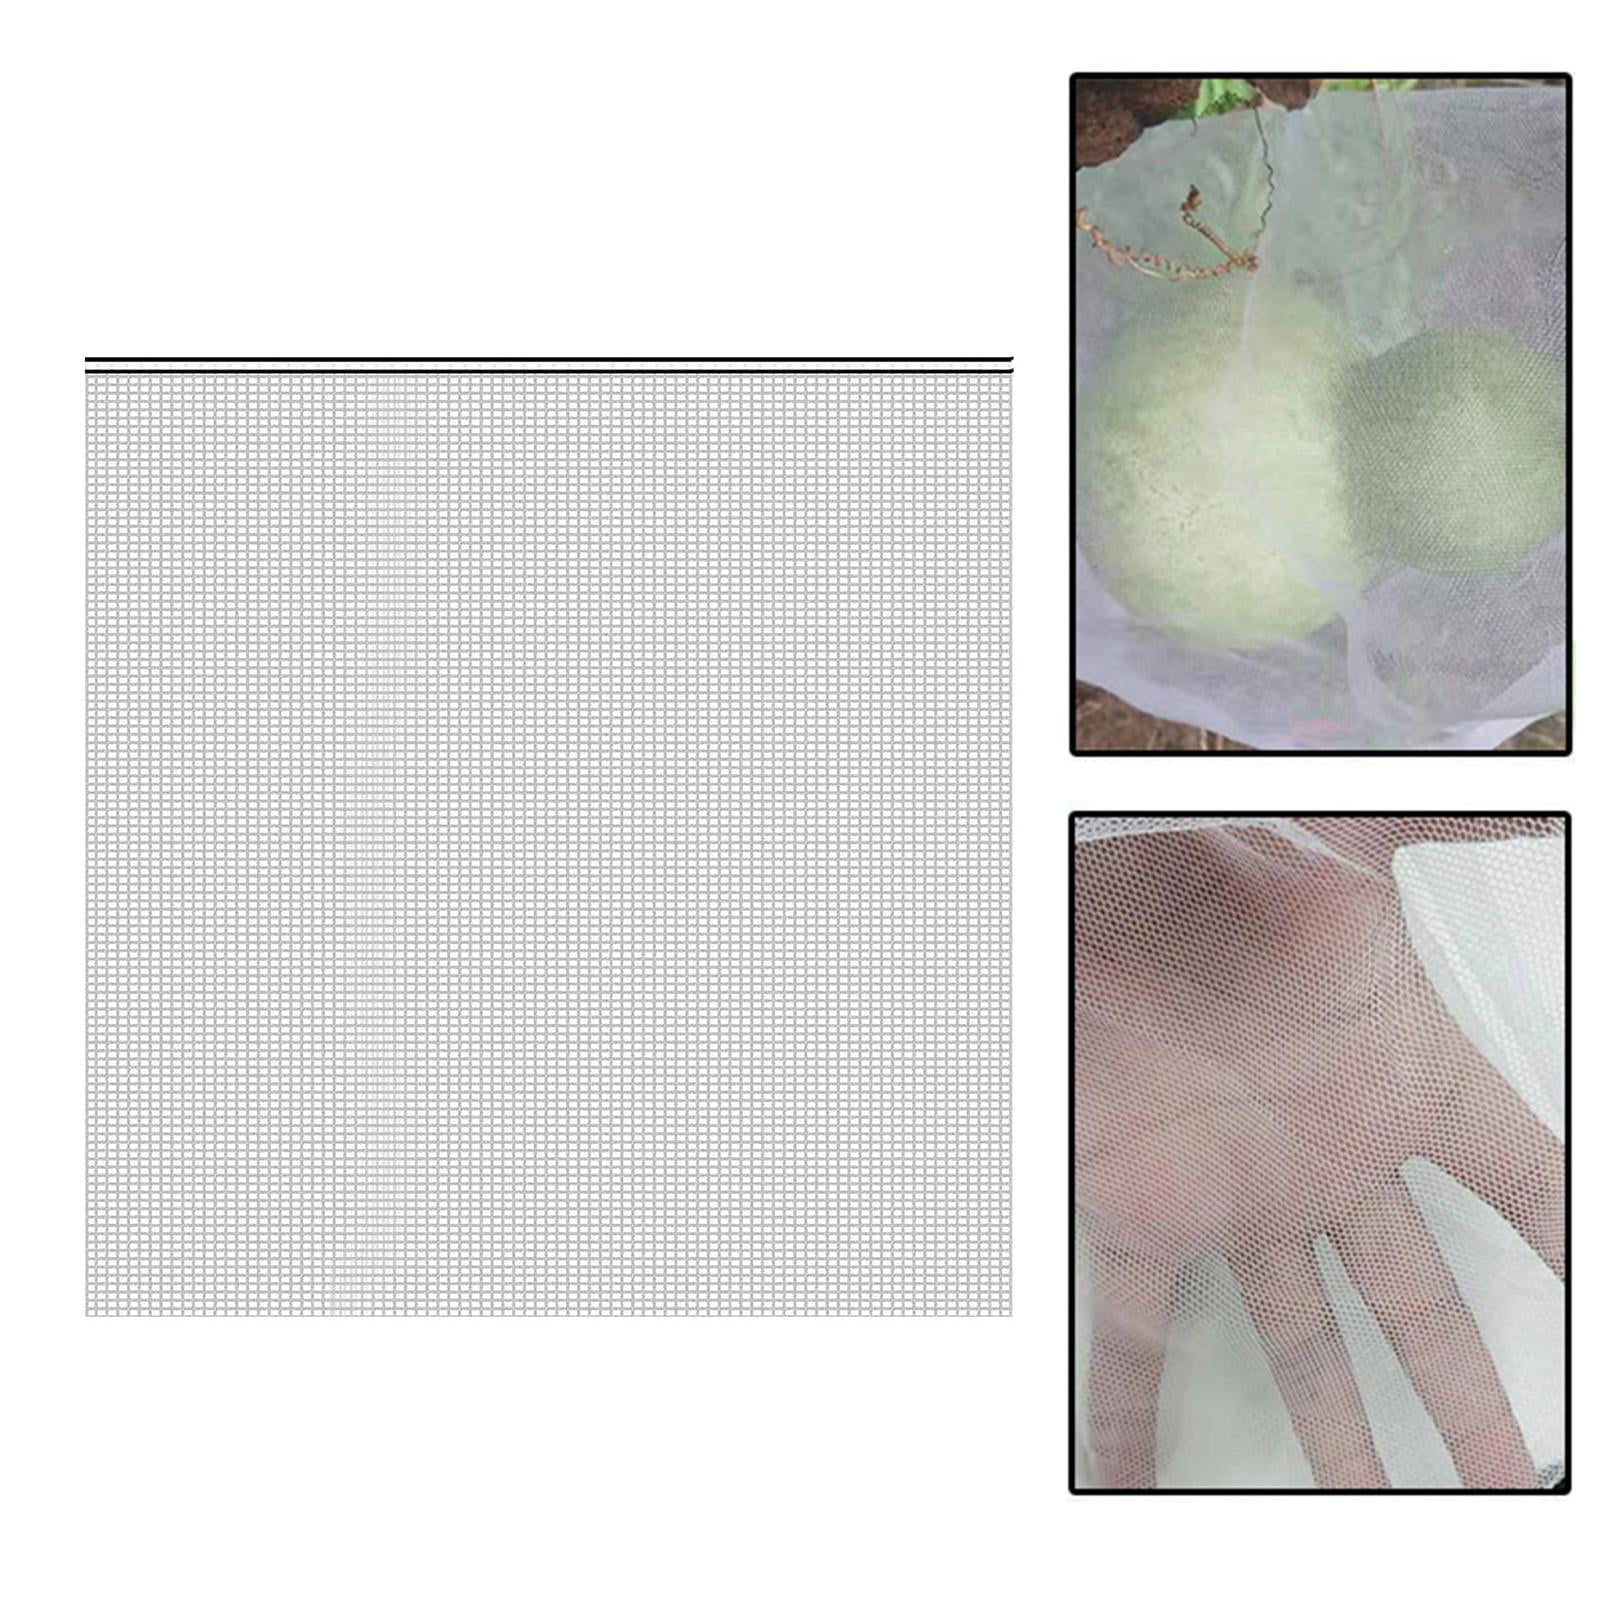 WPOtee Nylon Mesh Bag,100Pcs Netting Bags Nylon Net Barrier Bag with Drawstring for Protecting Plant Reusable 